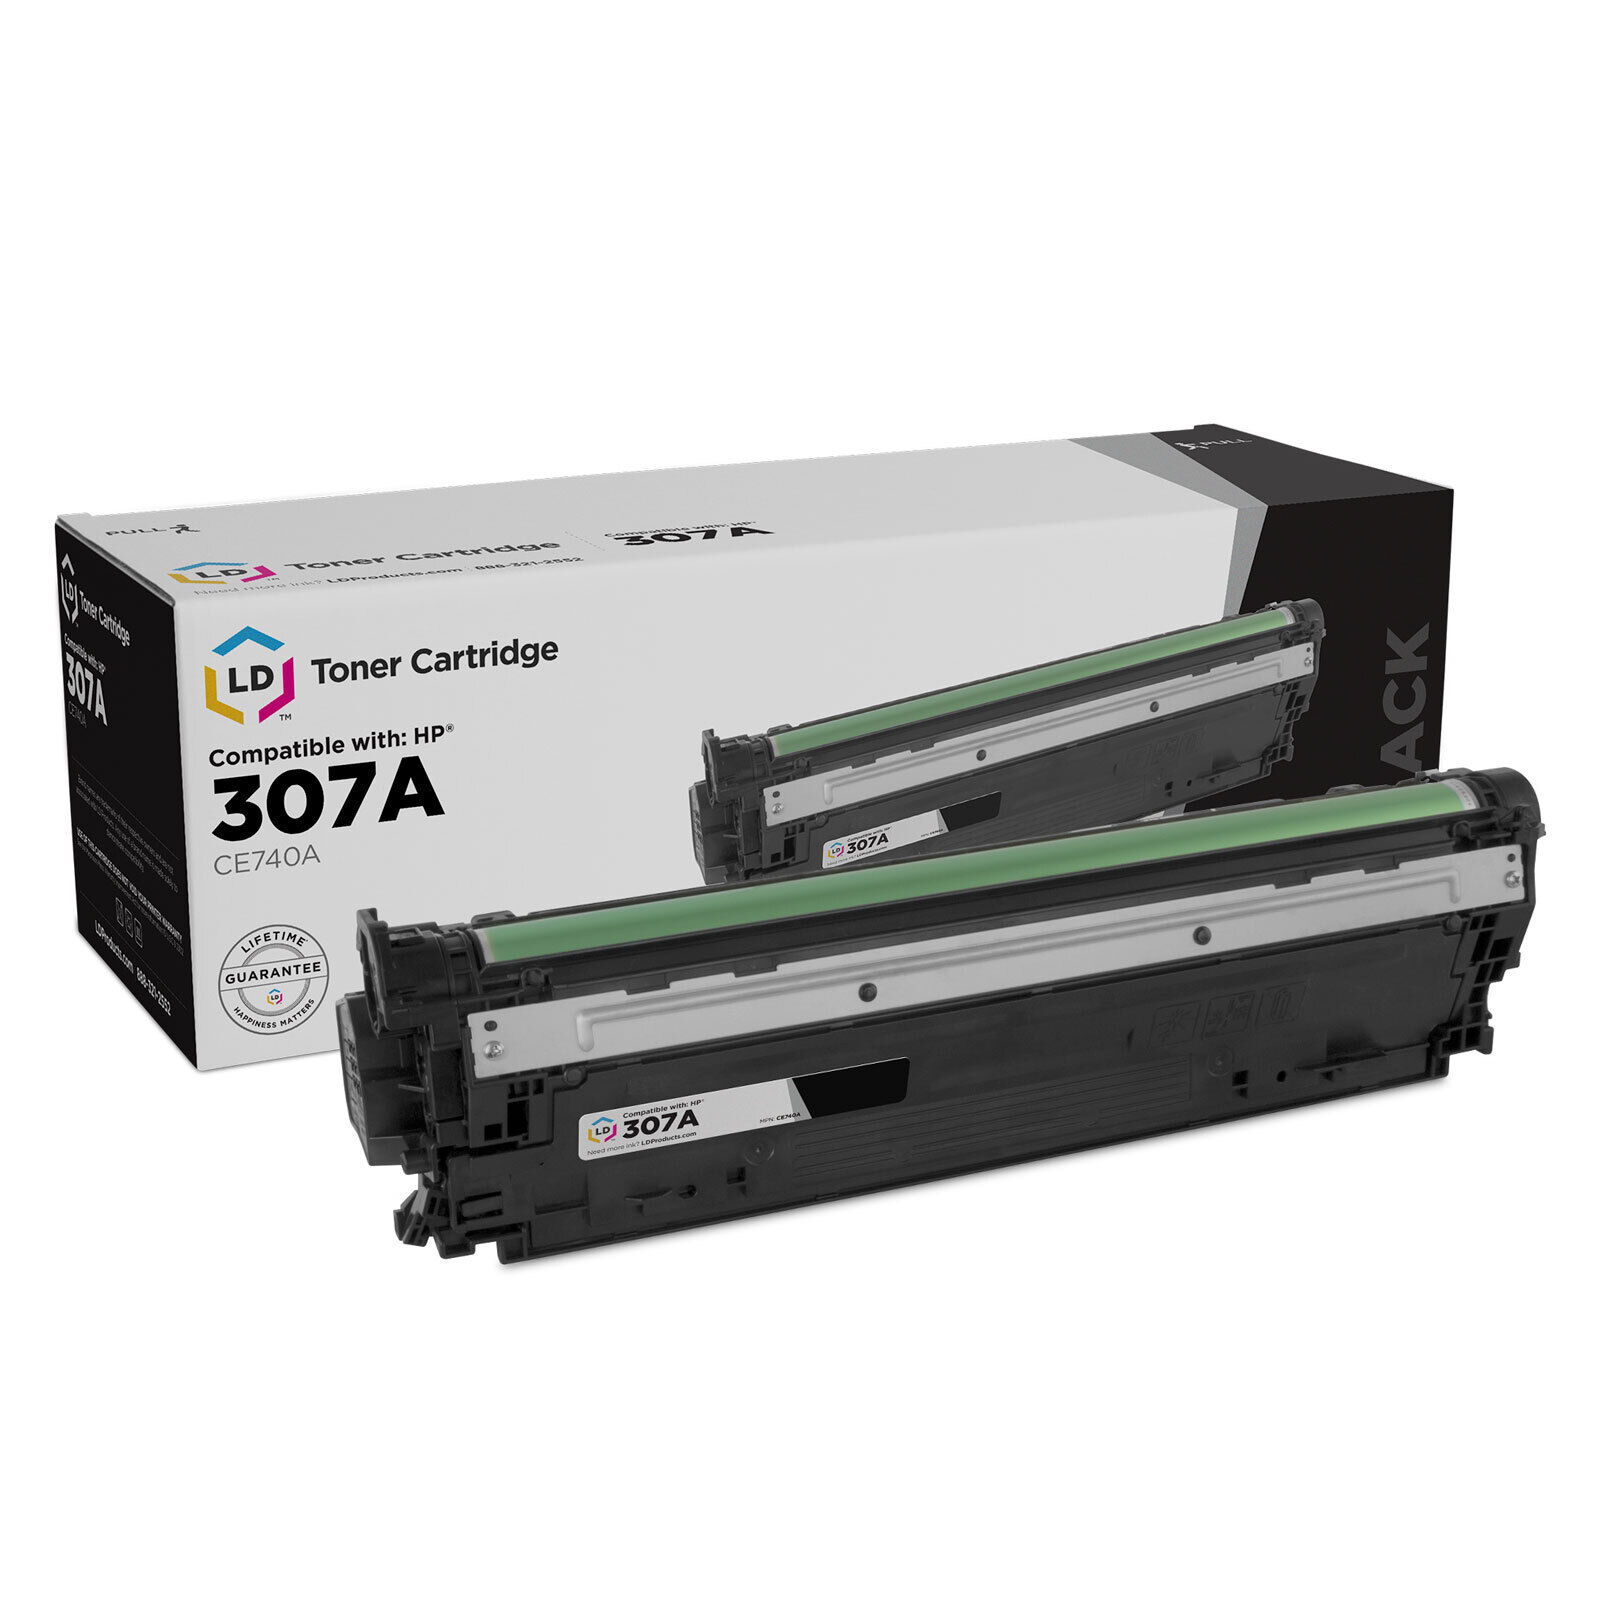 LD CE740A for HP 307A Black Toner Cartridge LaserJet Pro CP5225 CP5225dn CP5225n